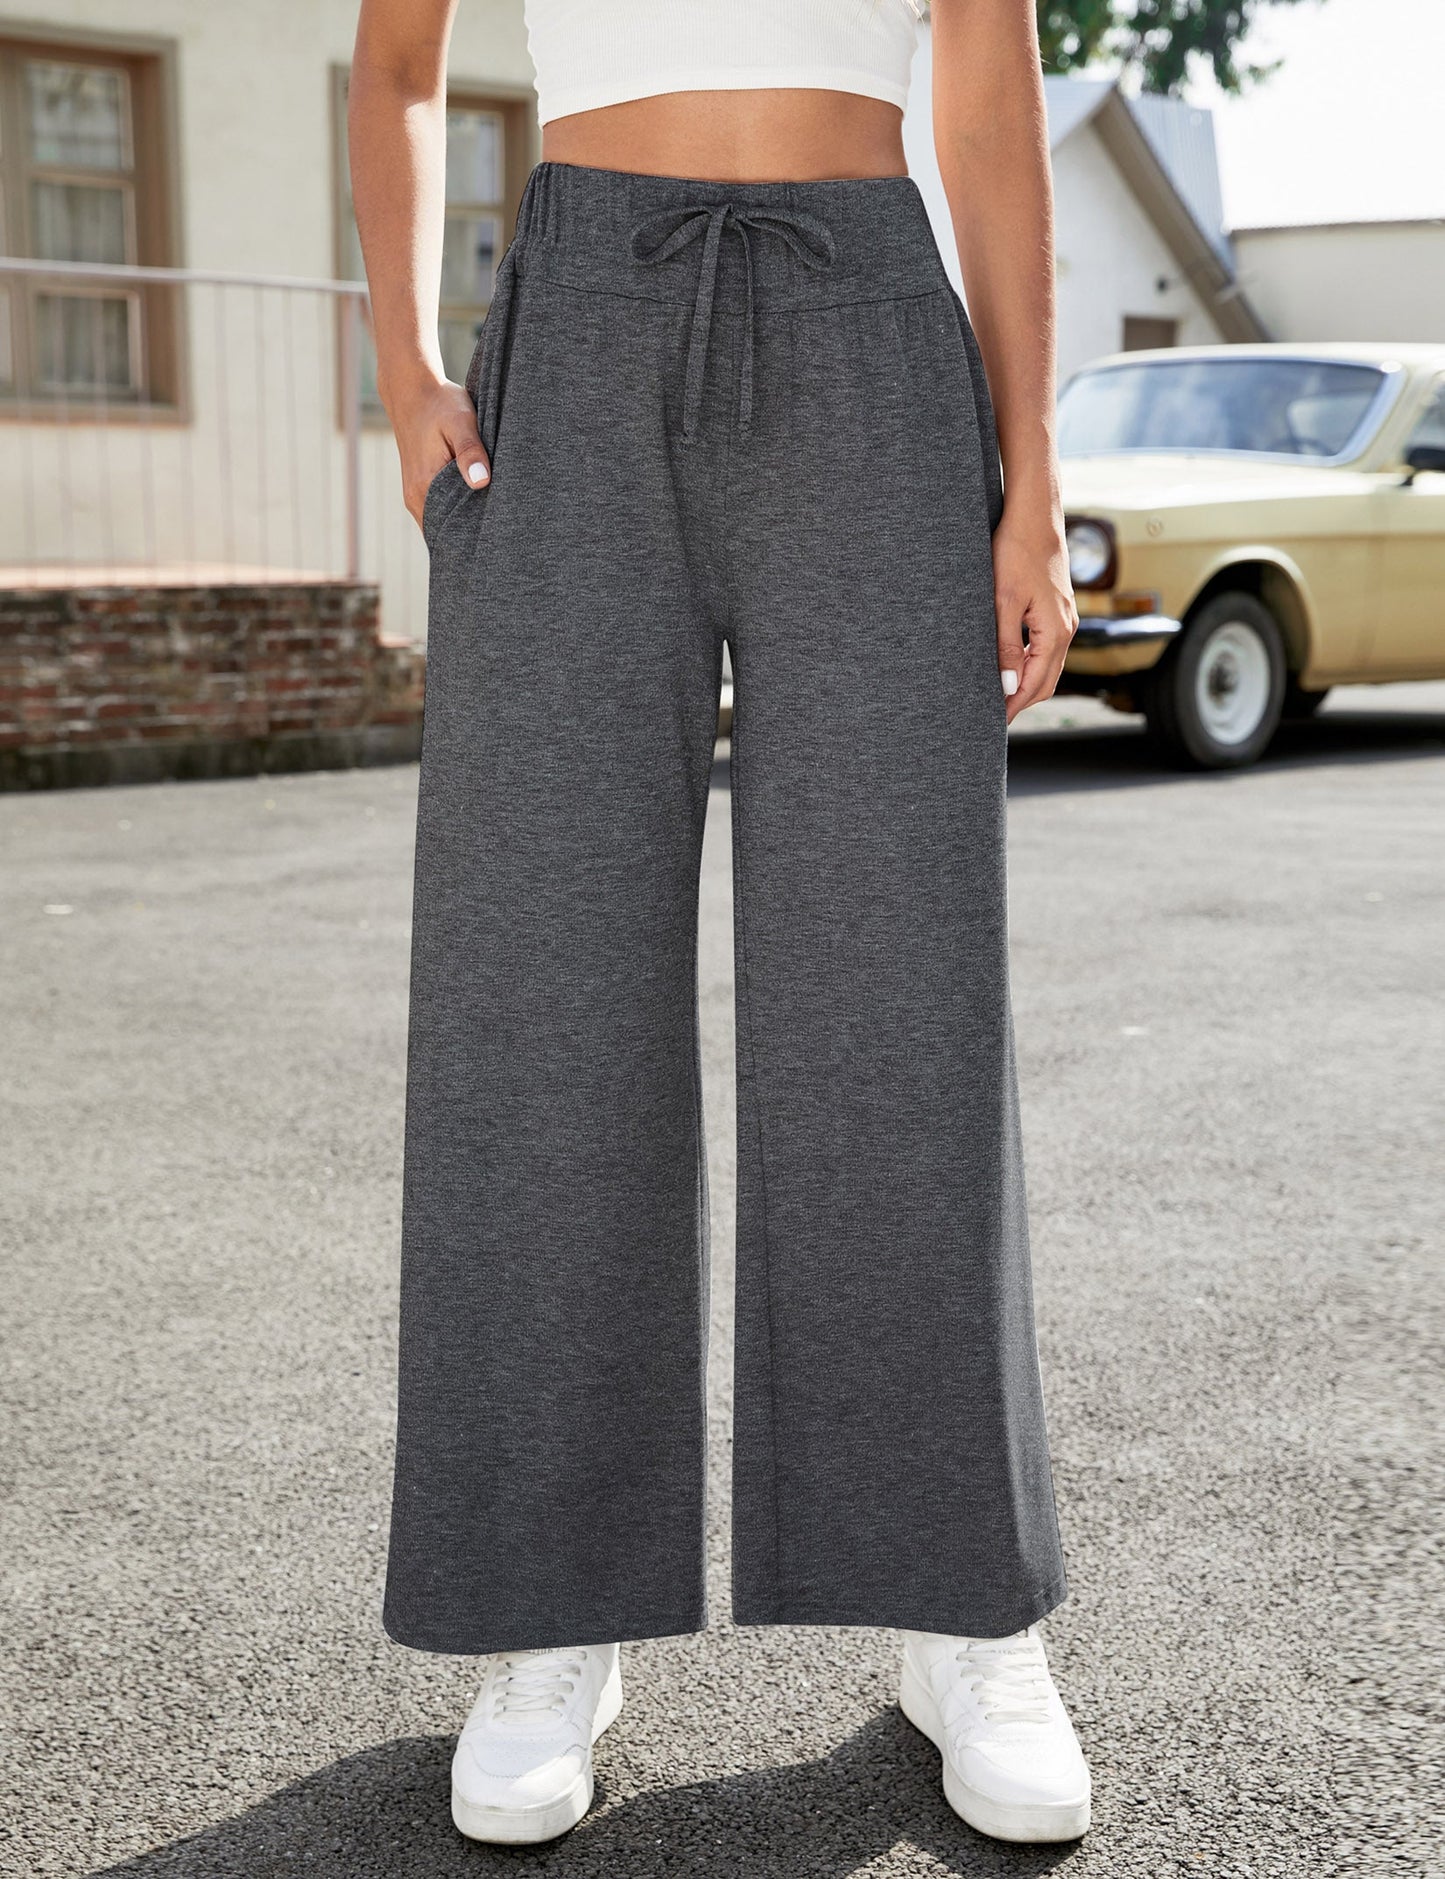 YESFASHION Women's Yoga Pants with Pockets Drawstring Pants